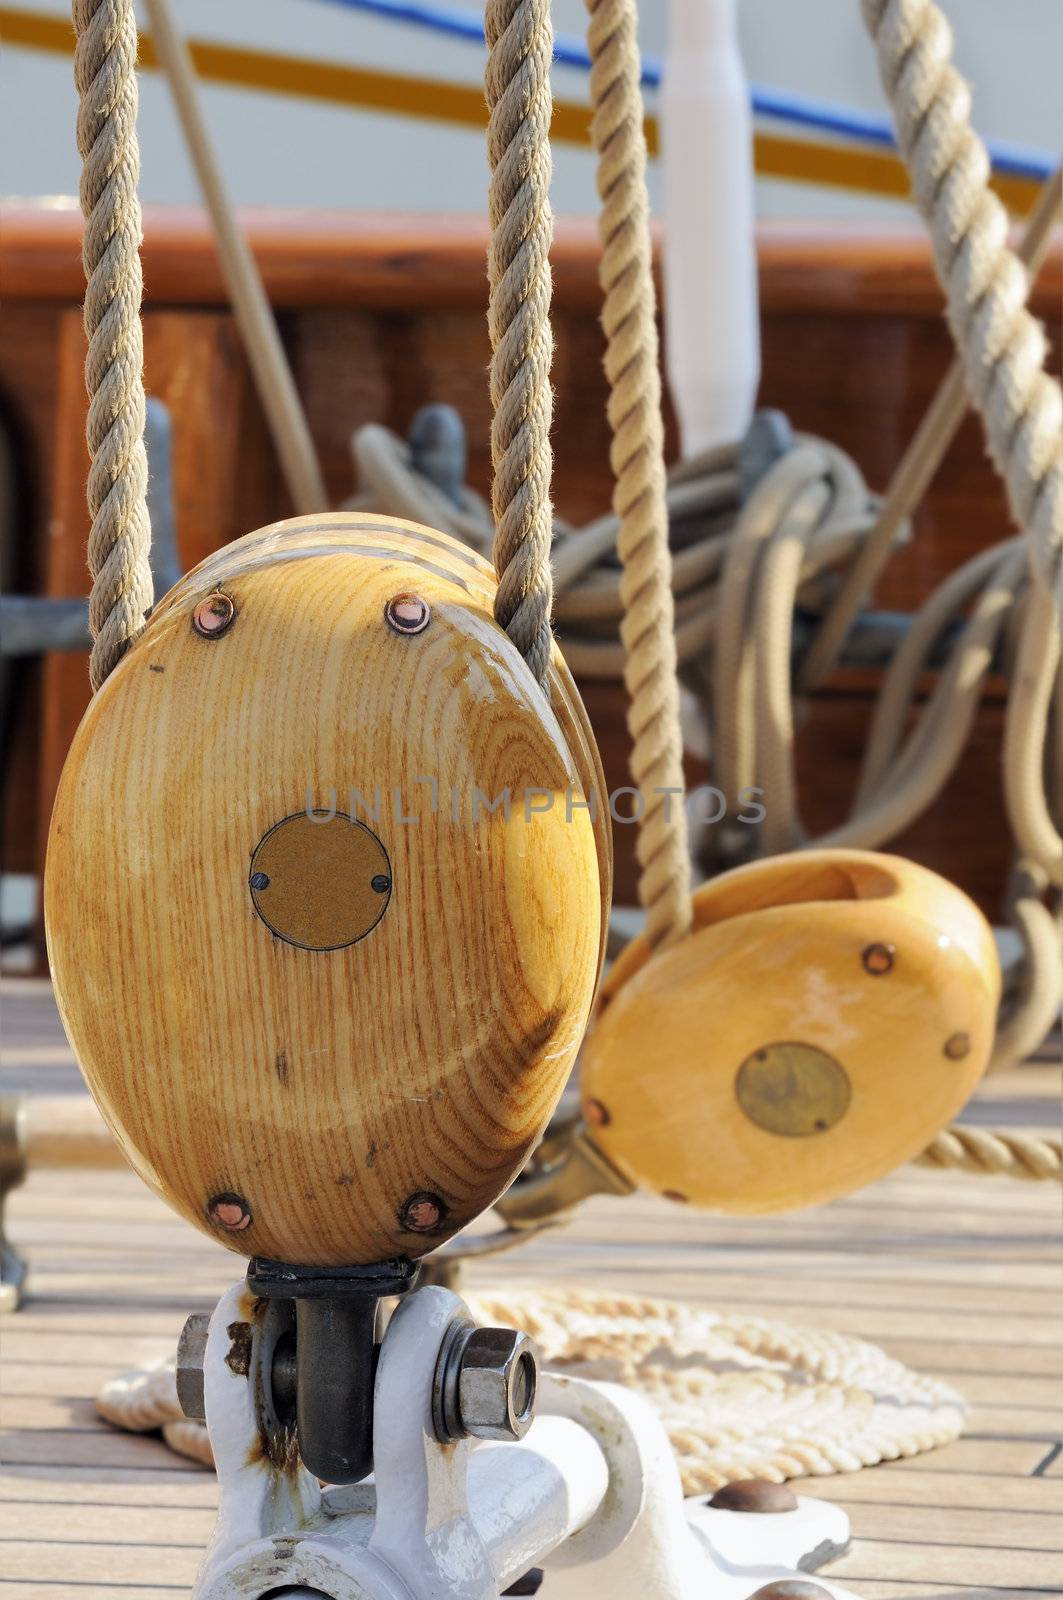 Sailing pulleys and ropens of an ancient sailboat